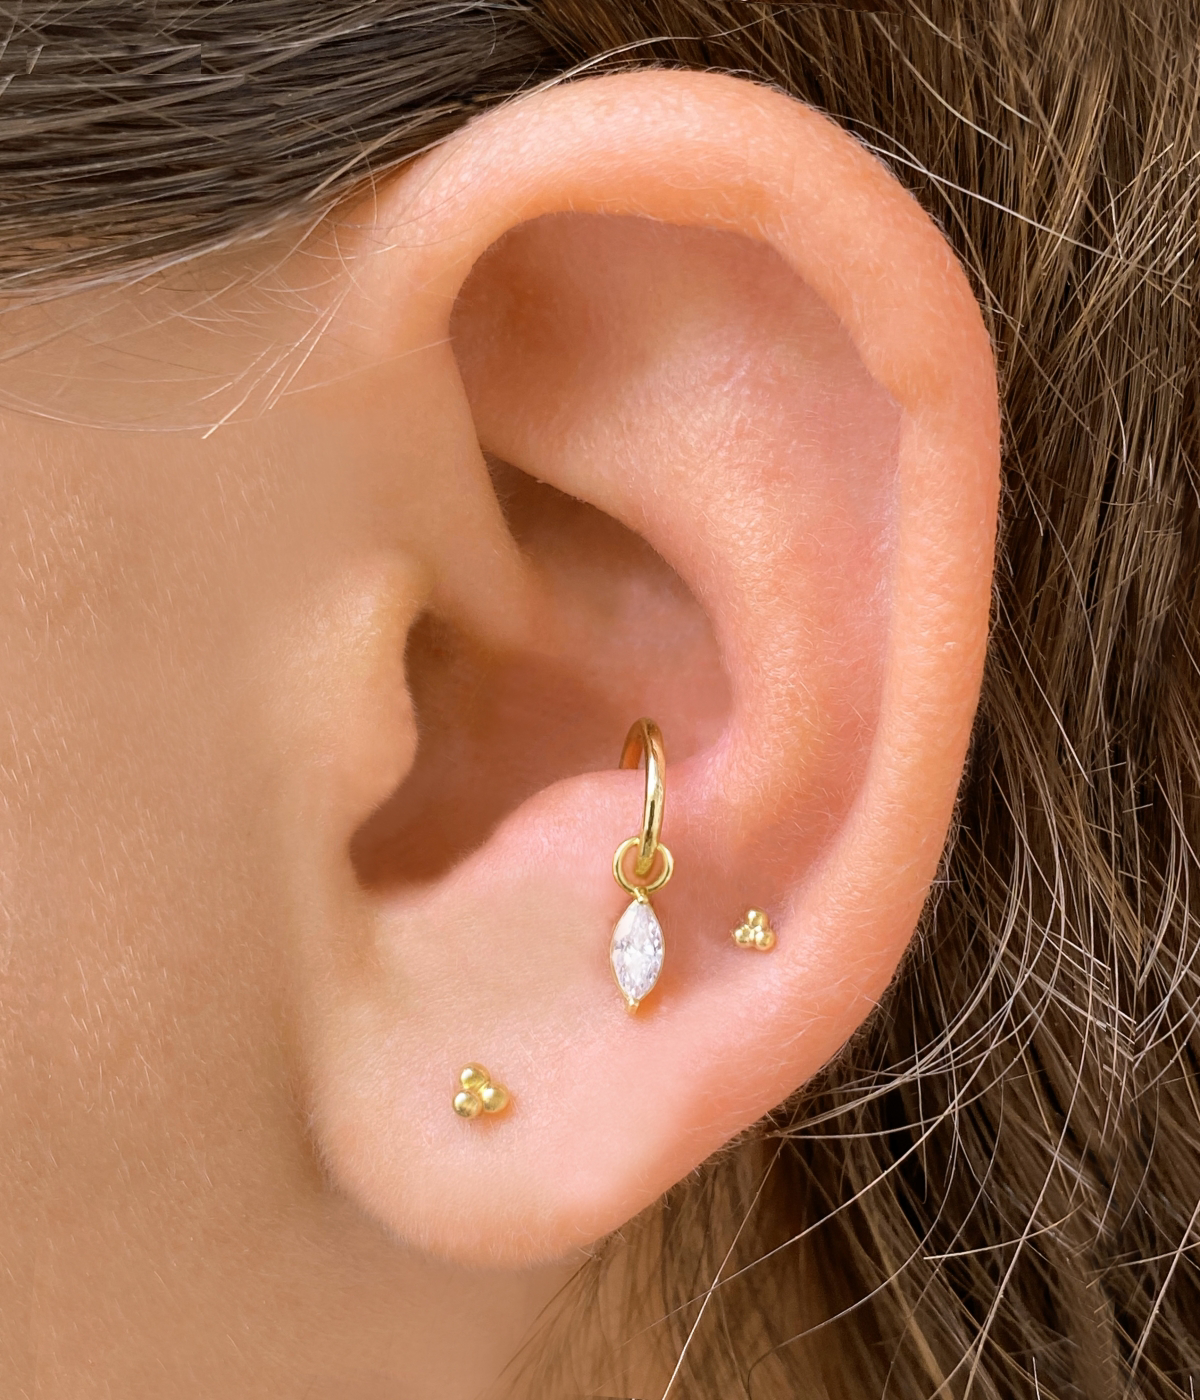 anti tragus ear piercing